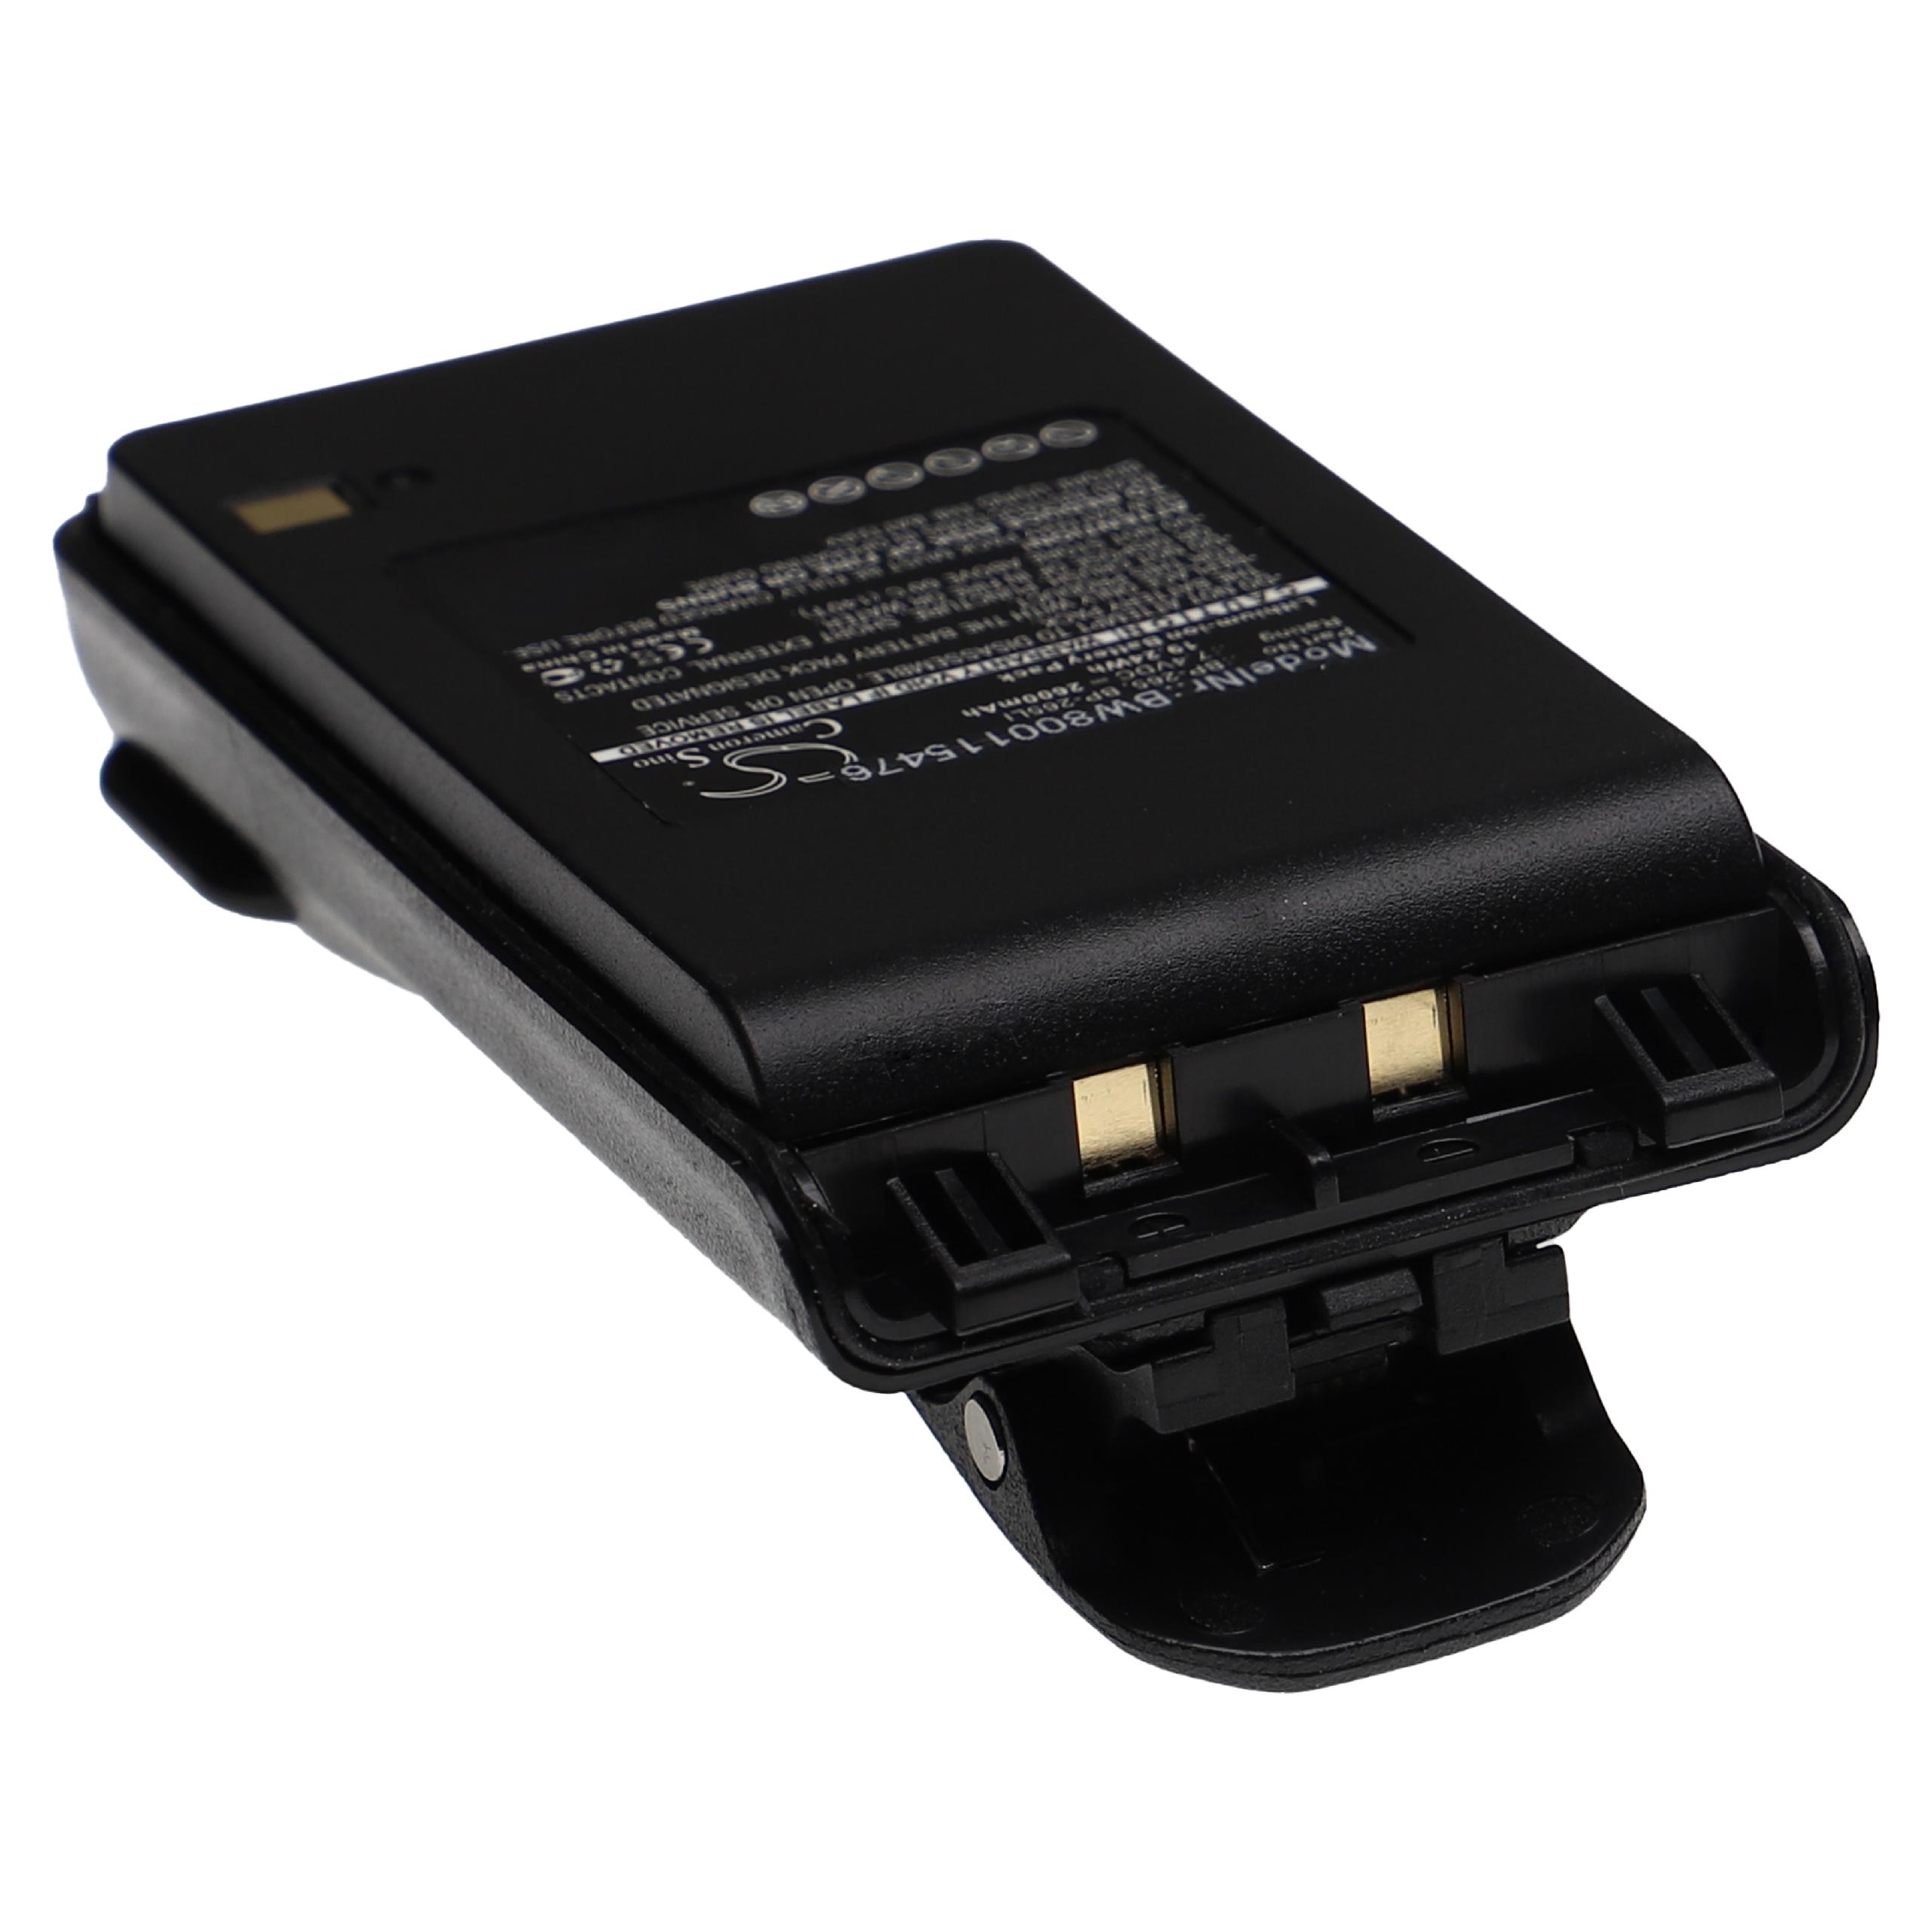 Batterie remplace Icom BP-265LI, BP-265 pour radio talkie-walkie - 2600mAh 7,4V Li-ion